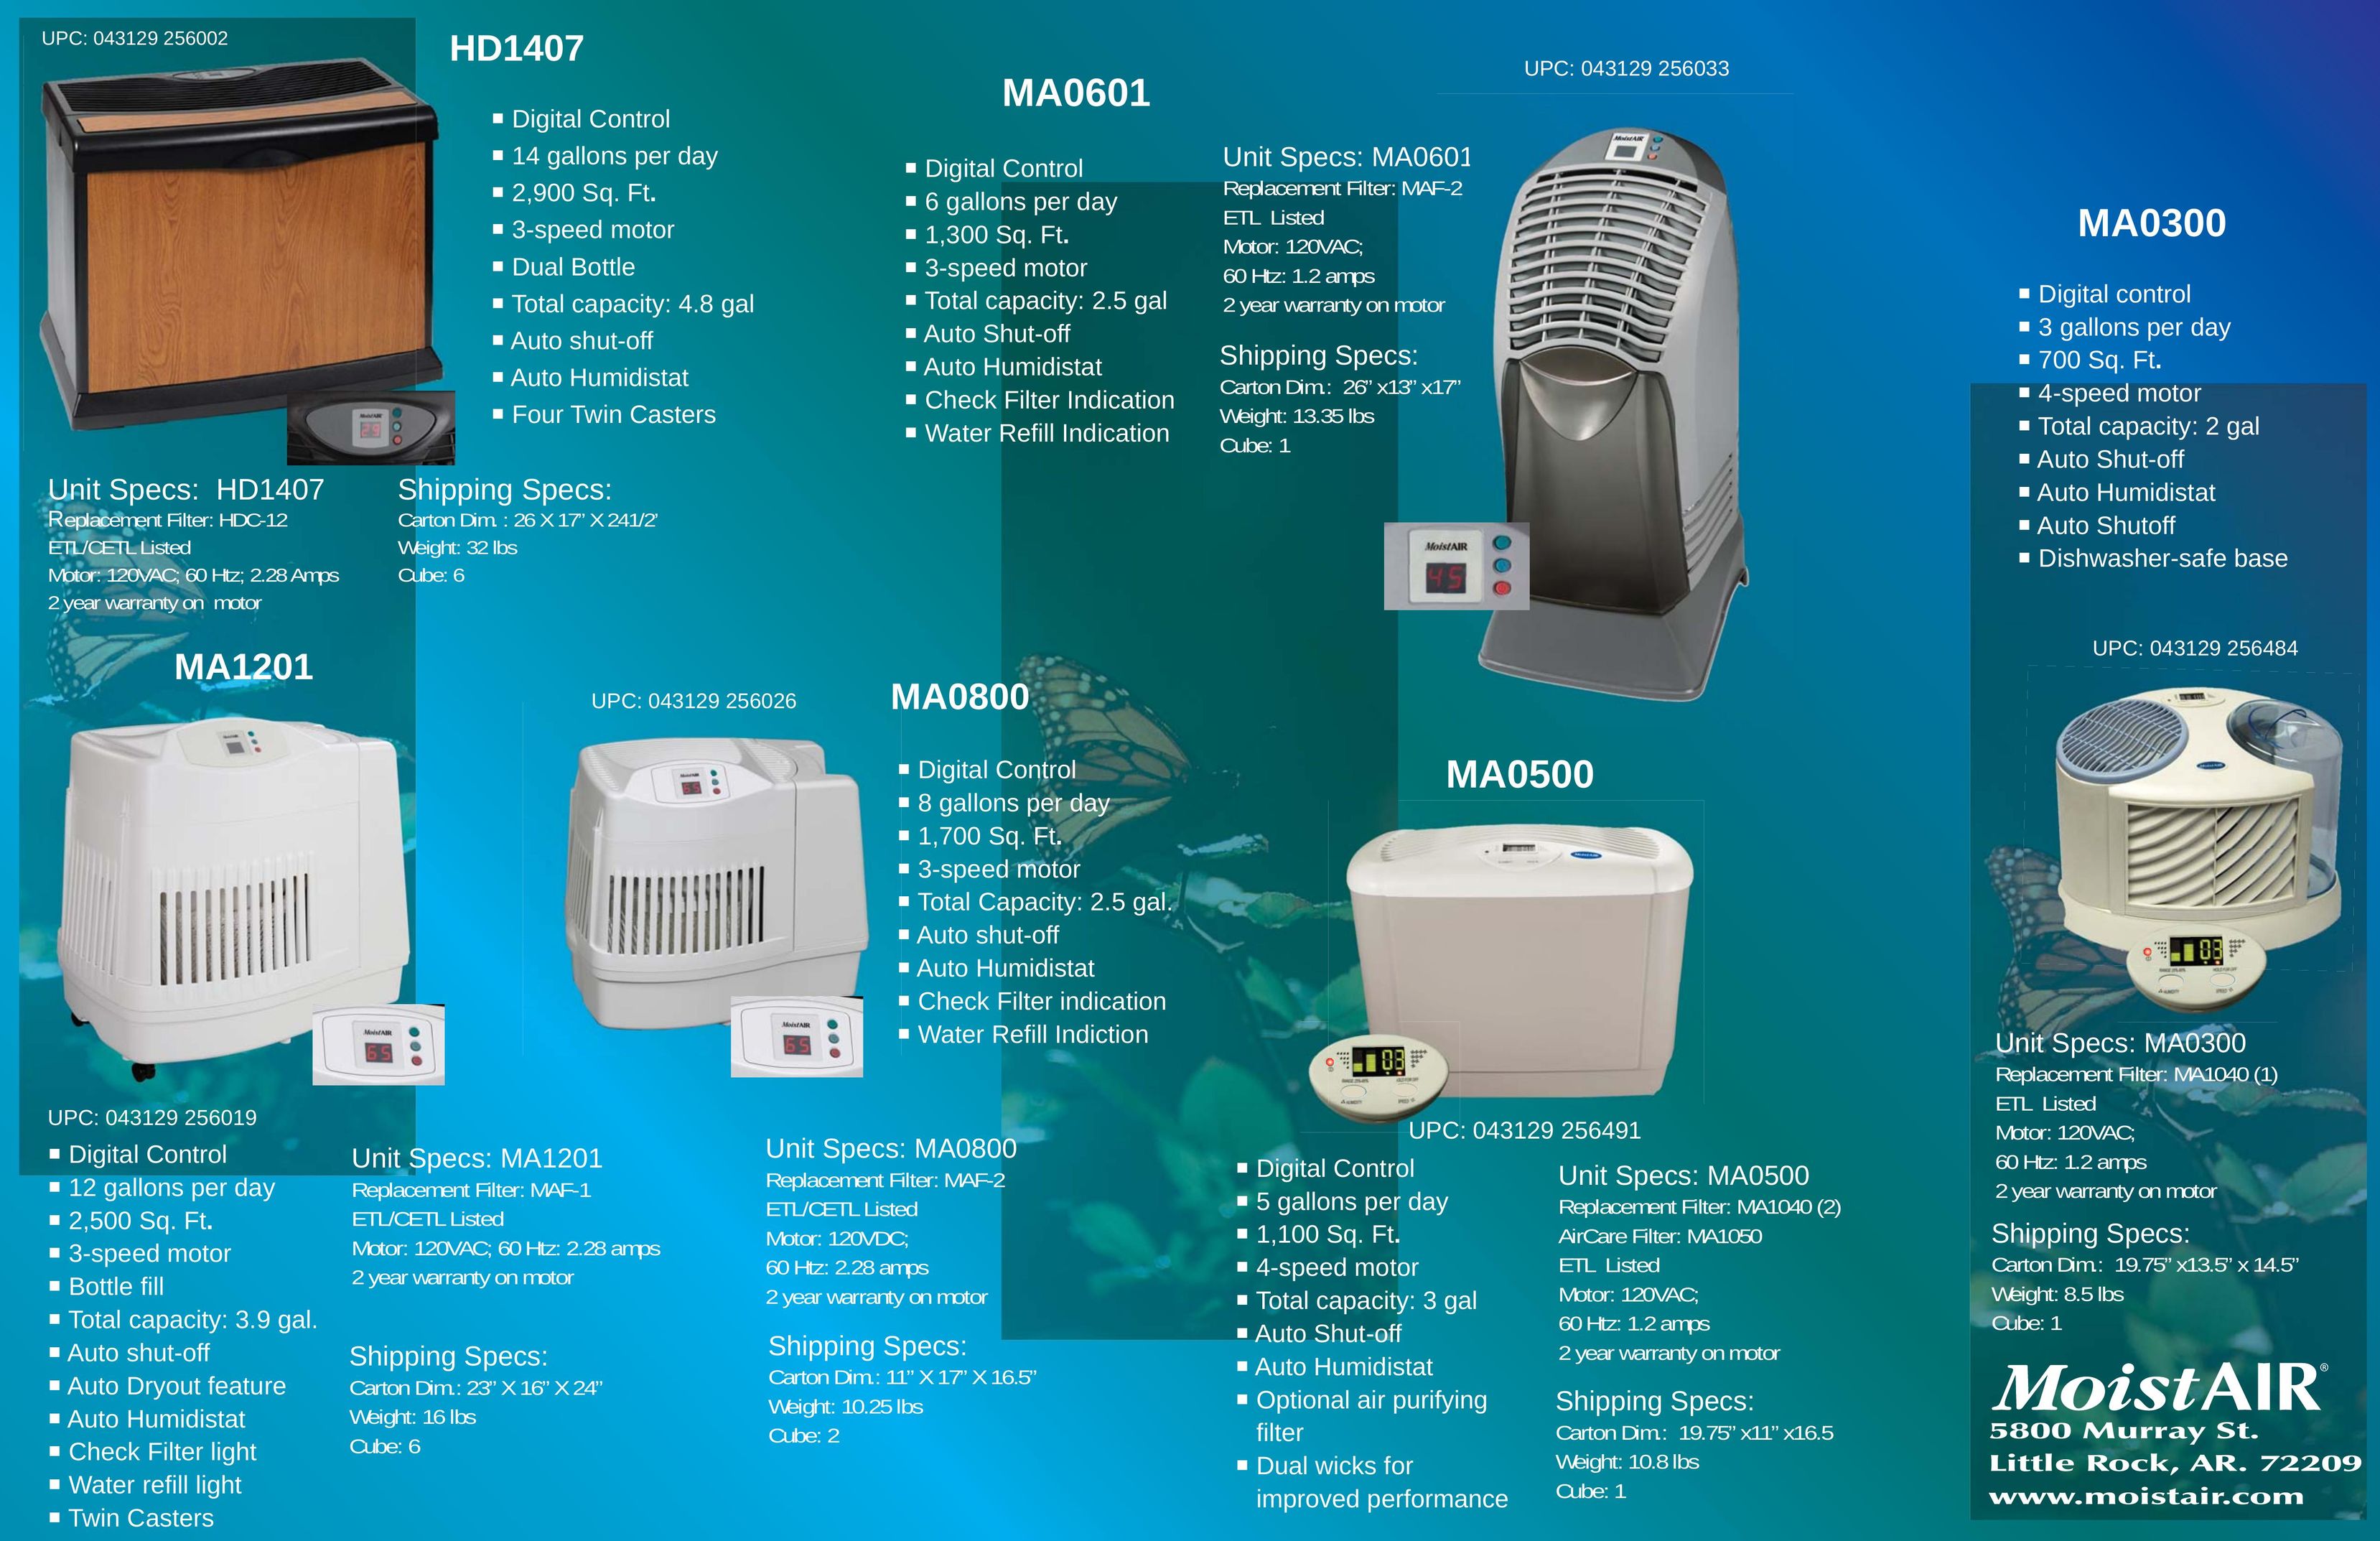 MoistAir HD1407 Humidifier User Manual